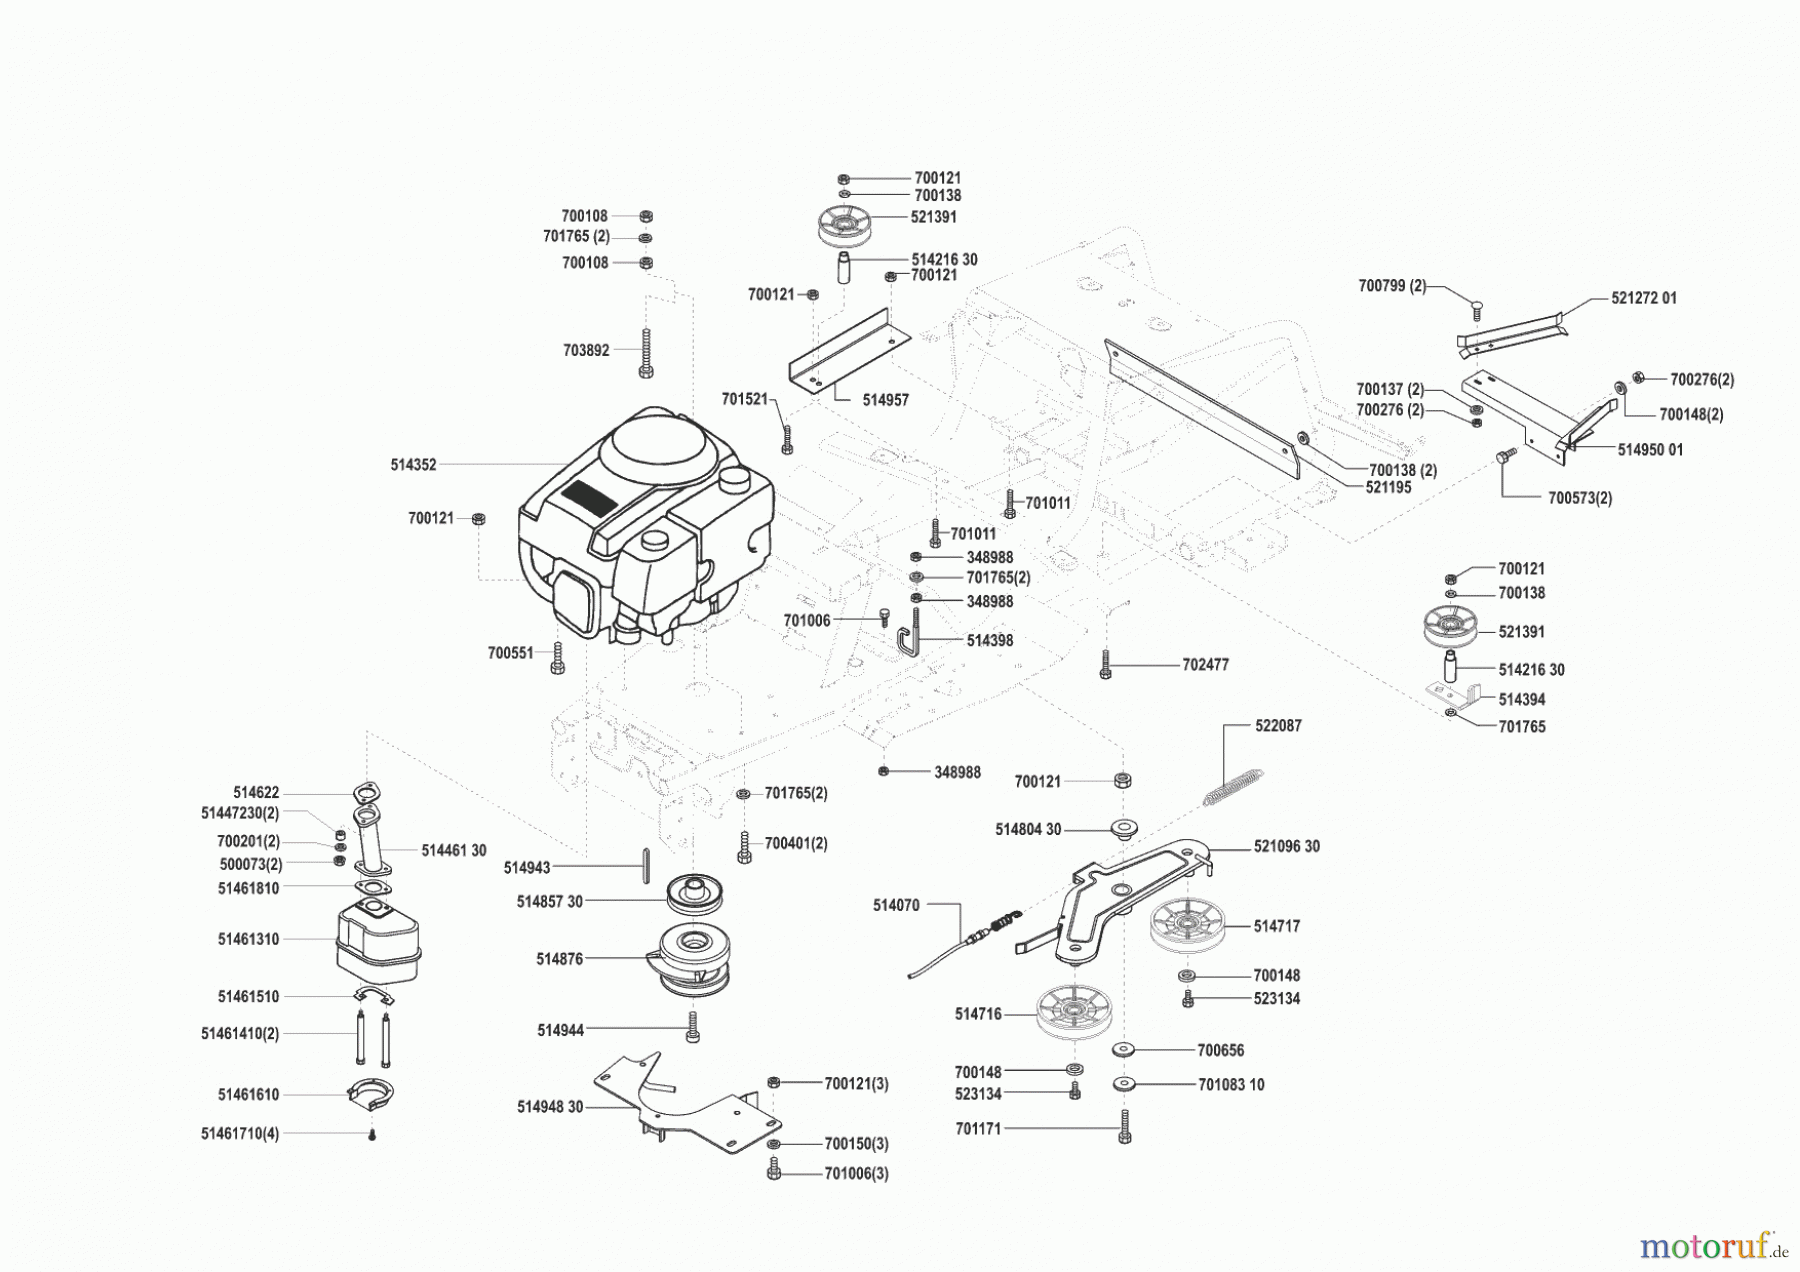  Concord Gartentechnik Rasentraktor T13-102 HD-H  02/2001 Seite 4